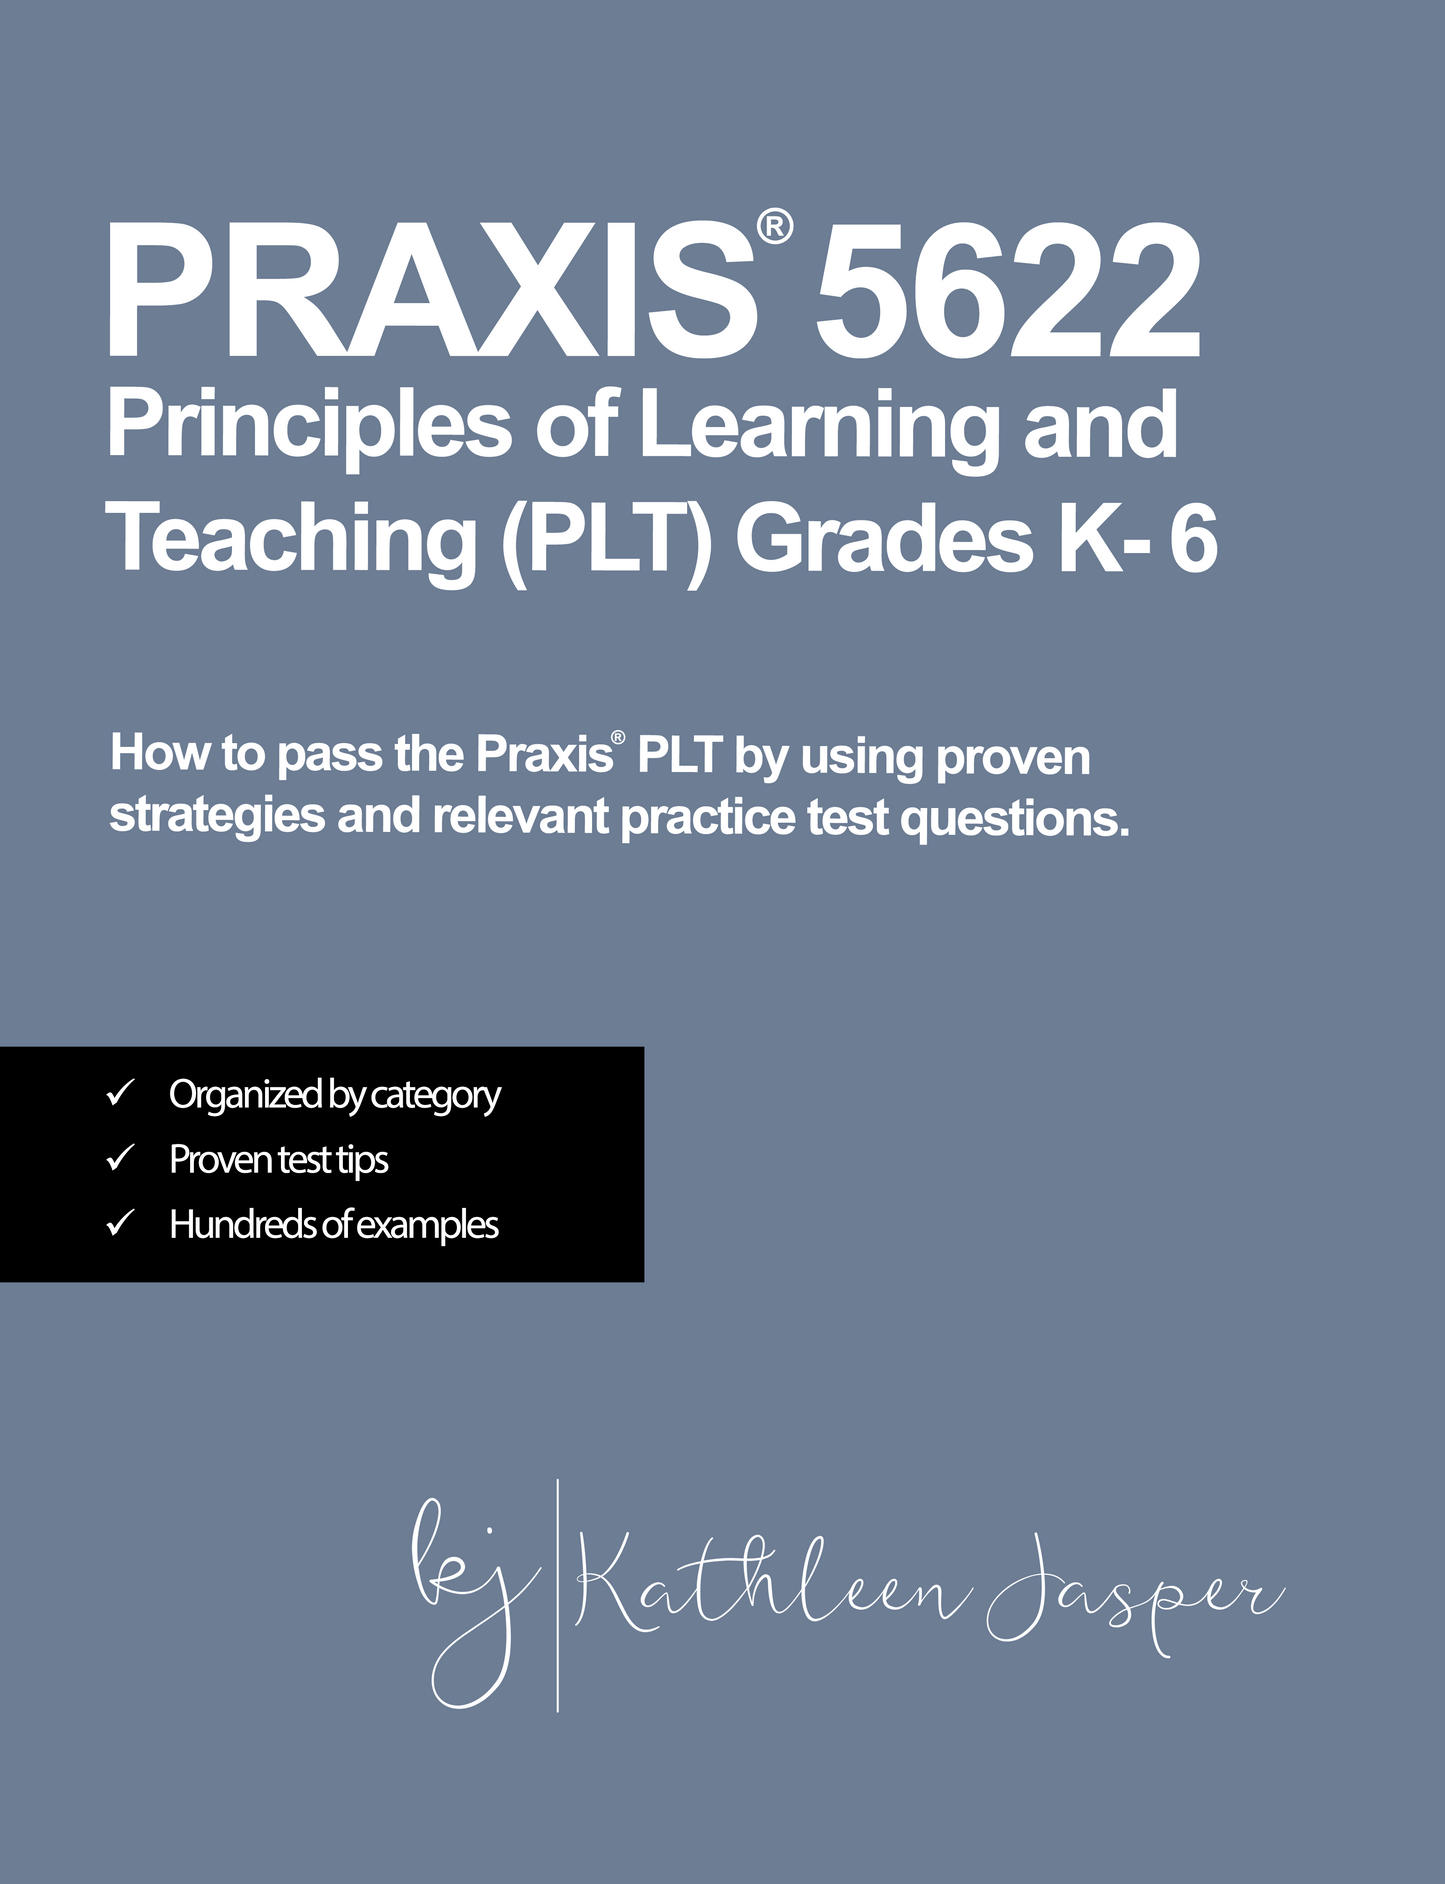 Praxis PLT K-6 (5622) Digital Study Guide